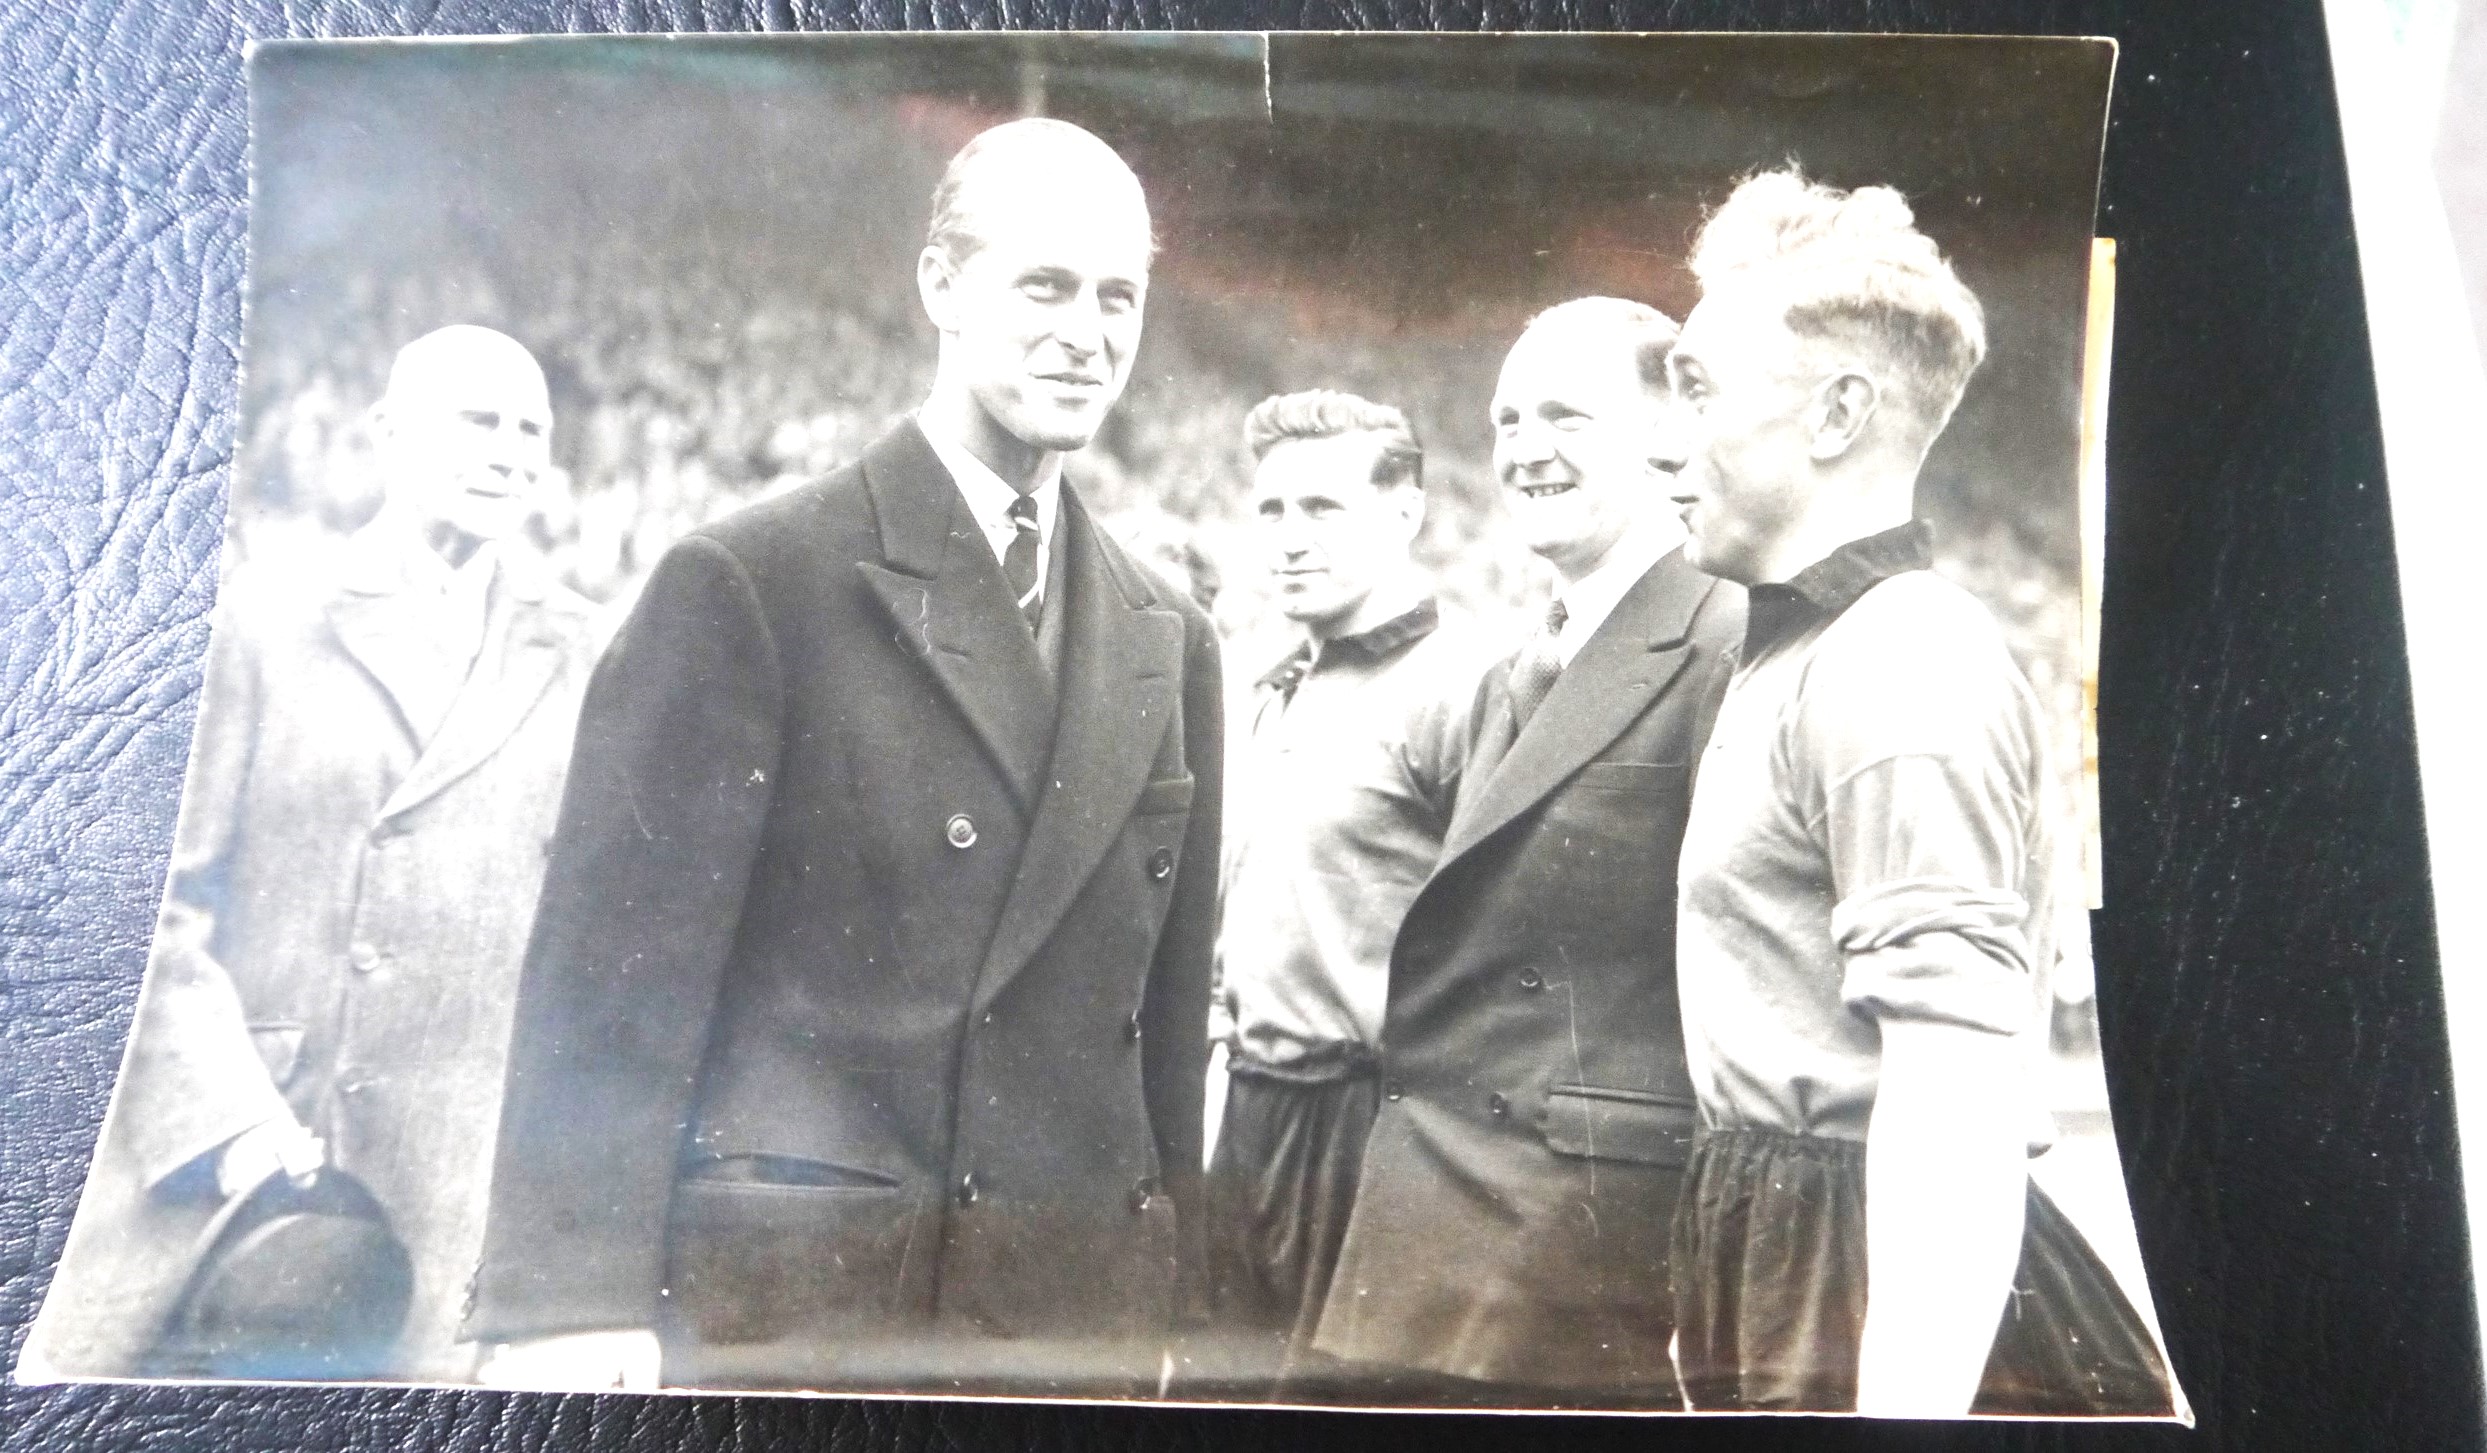 WOLVERHAMPTON WANDERERS 1949 FA CUP FINAL ORIGINAL PRESS PHOTO